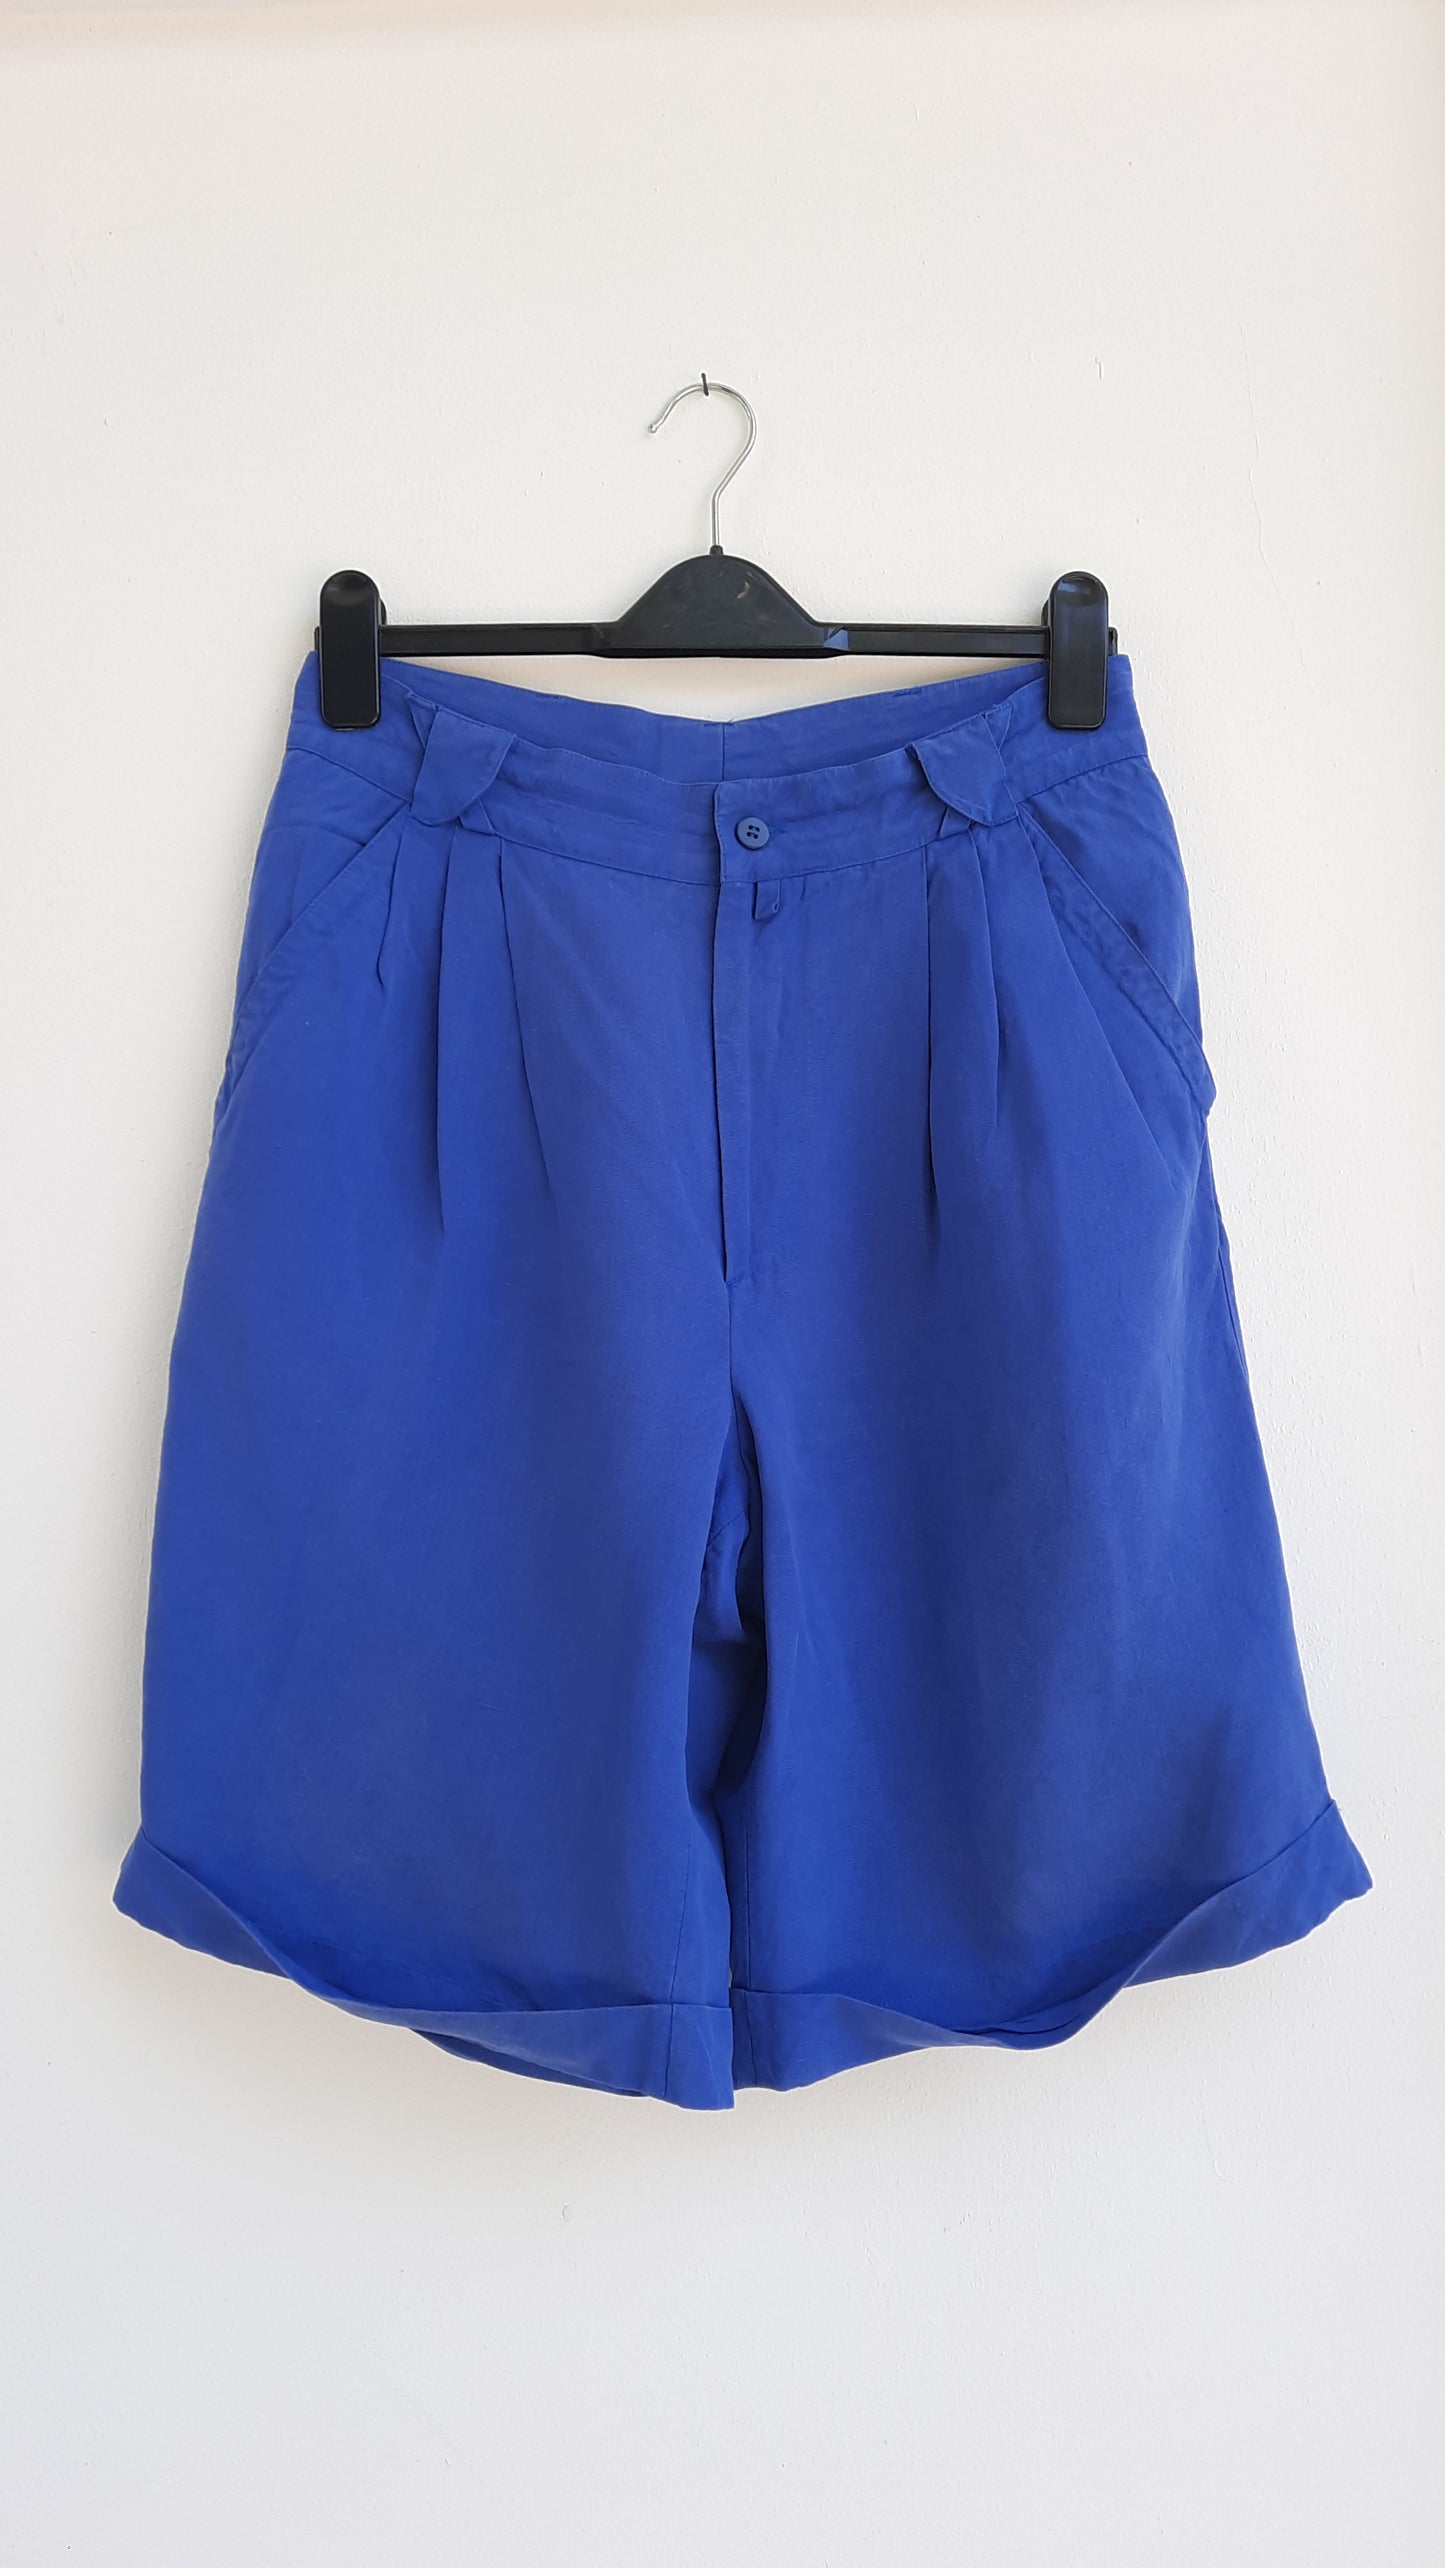 Vintage Versus by Gianni Versace Classic Cotton Shorts